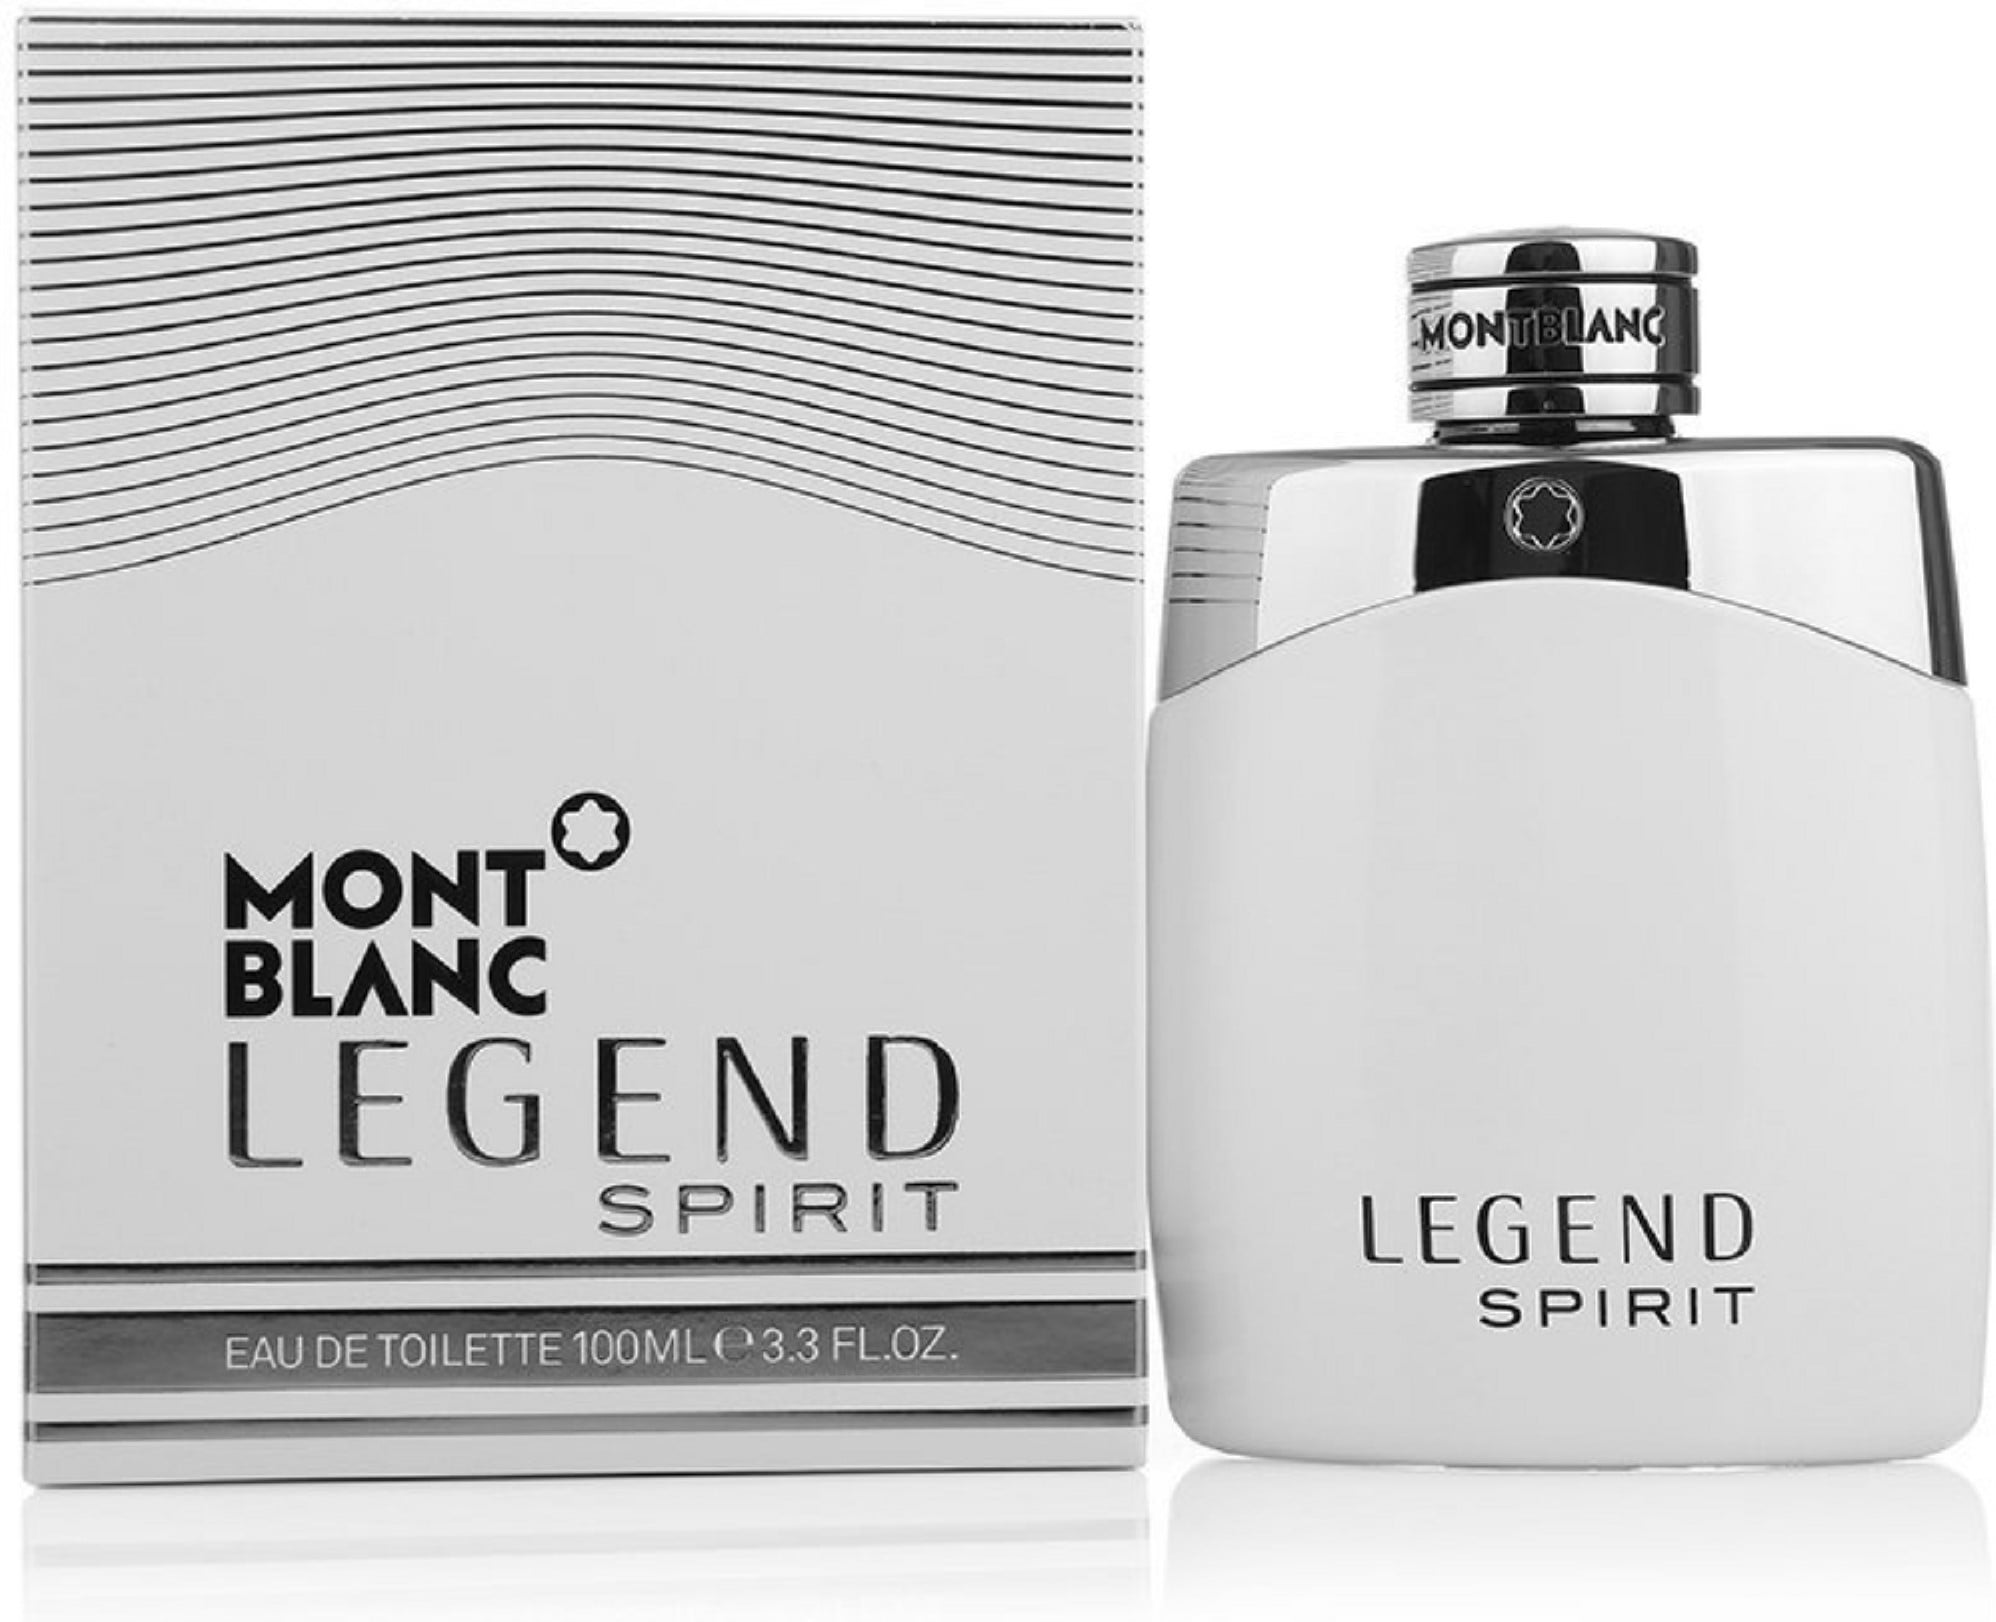 Парфюм легенда. Montblanc туалетная вода Legend Spirit, 100 мл. Montblanc Legend Spirit EDT for men 100 ml. Монблан духи мужские Legend Spirit. Mont Blanc Legend Spirit EDT 100ml.